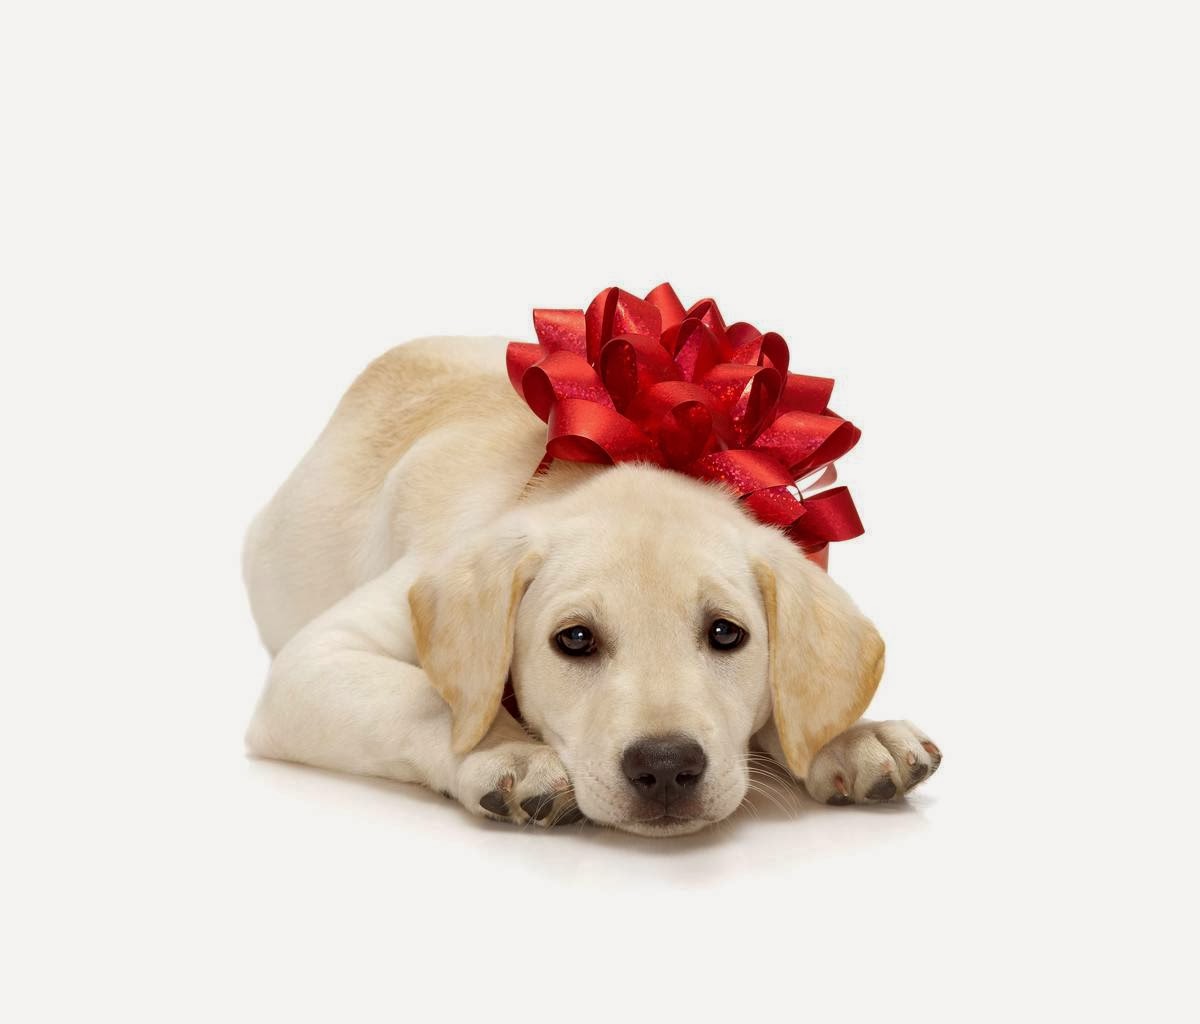 My Christmas Gift For Dog Lovers Wallpaper Your Desktop Tablet